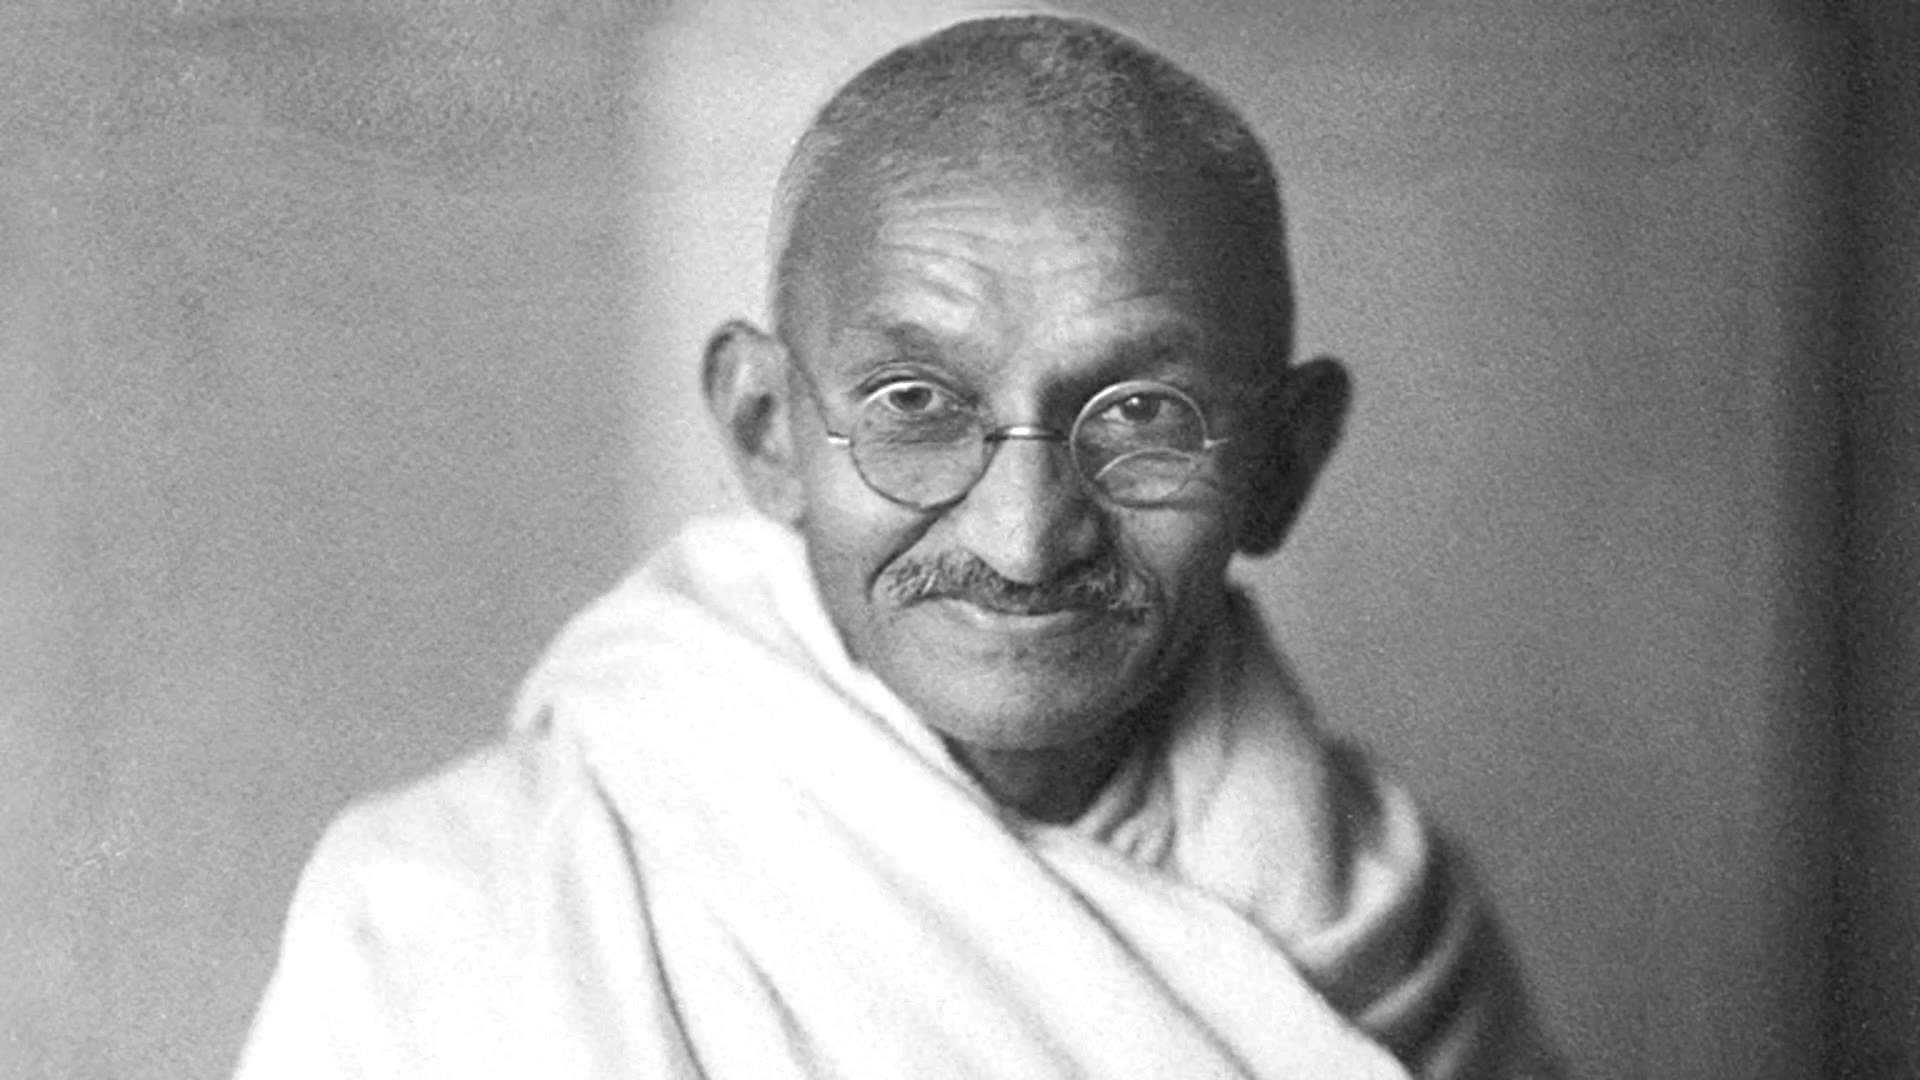 A Digital Mahatma Gandhi Exhibition Is Coming to Melbourne